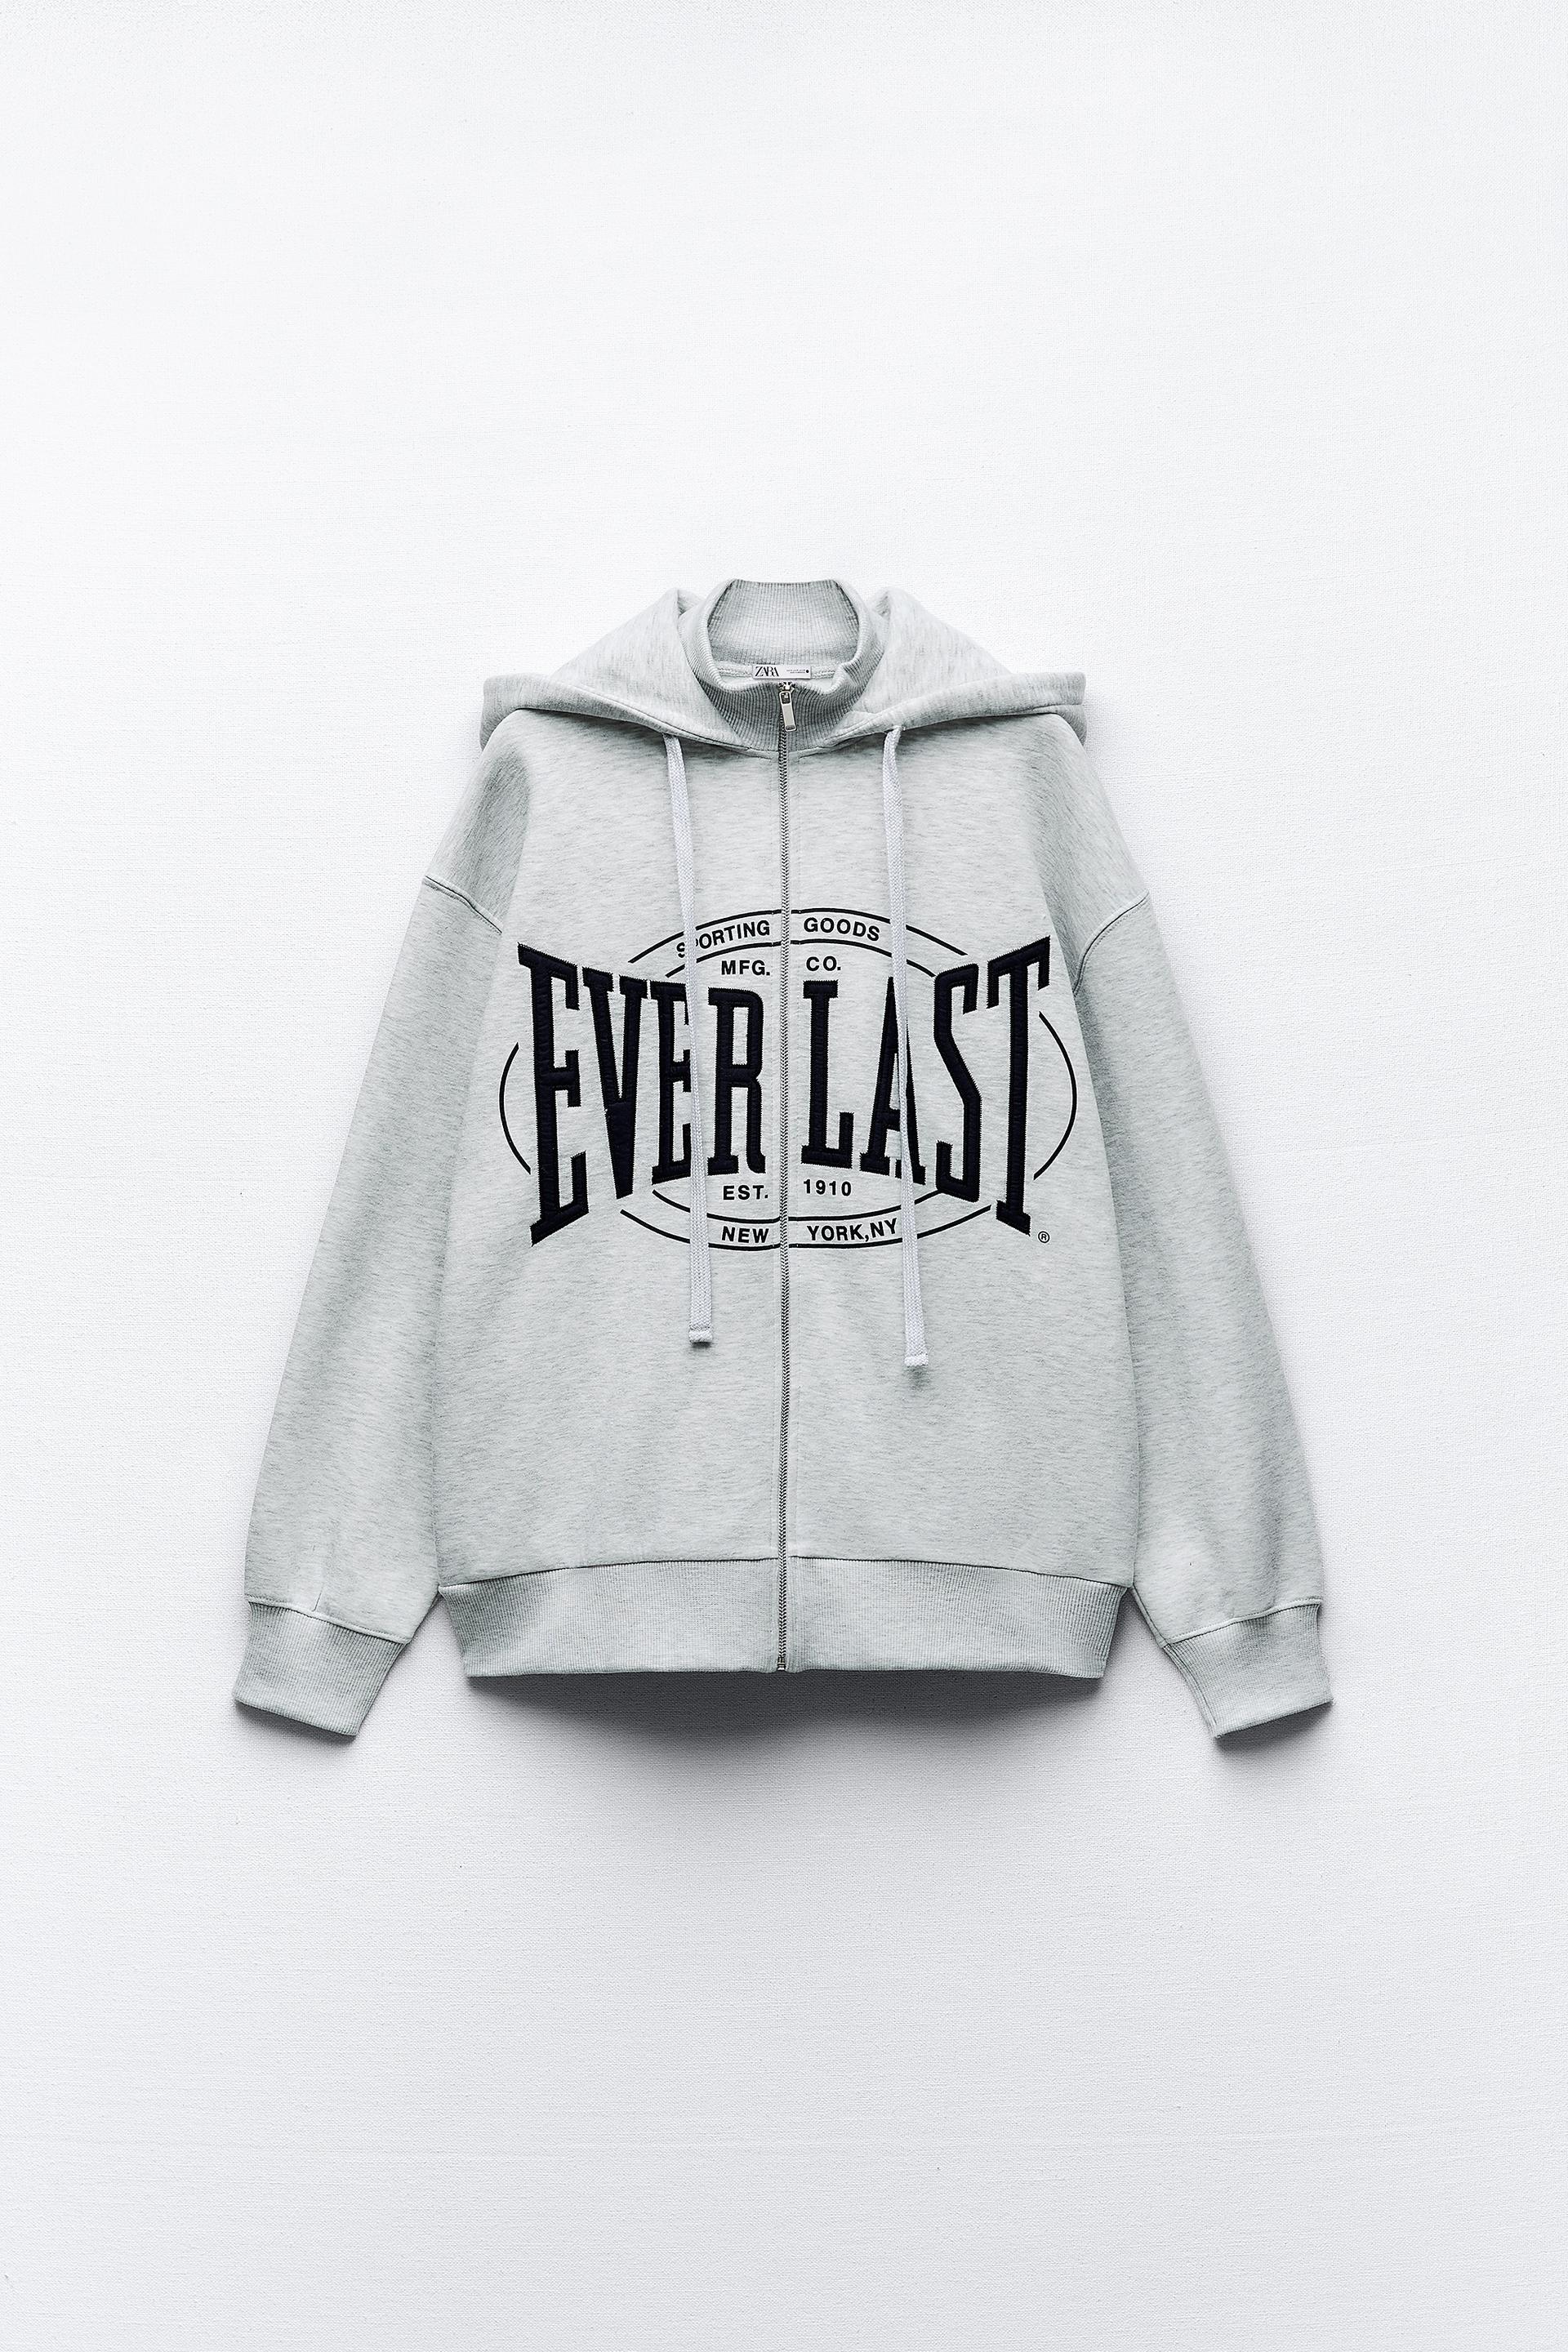 2 total Everlast Hoodie (75% cotton 25% polyester) Sweatshirt Gray (size S